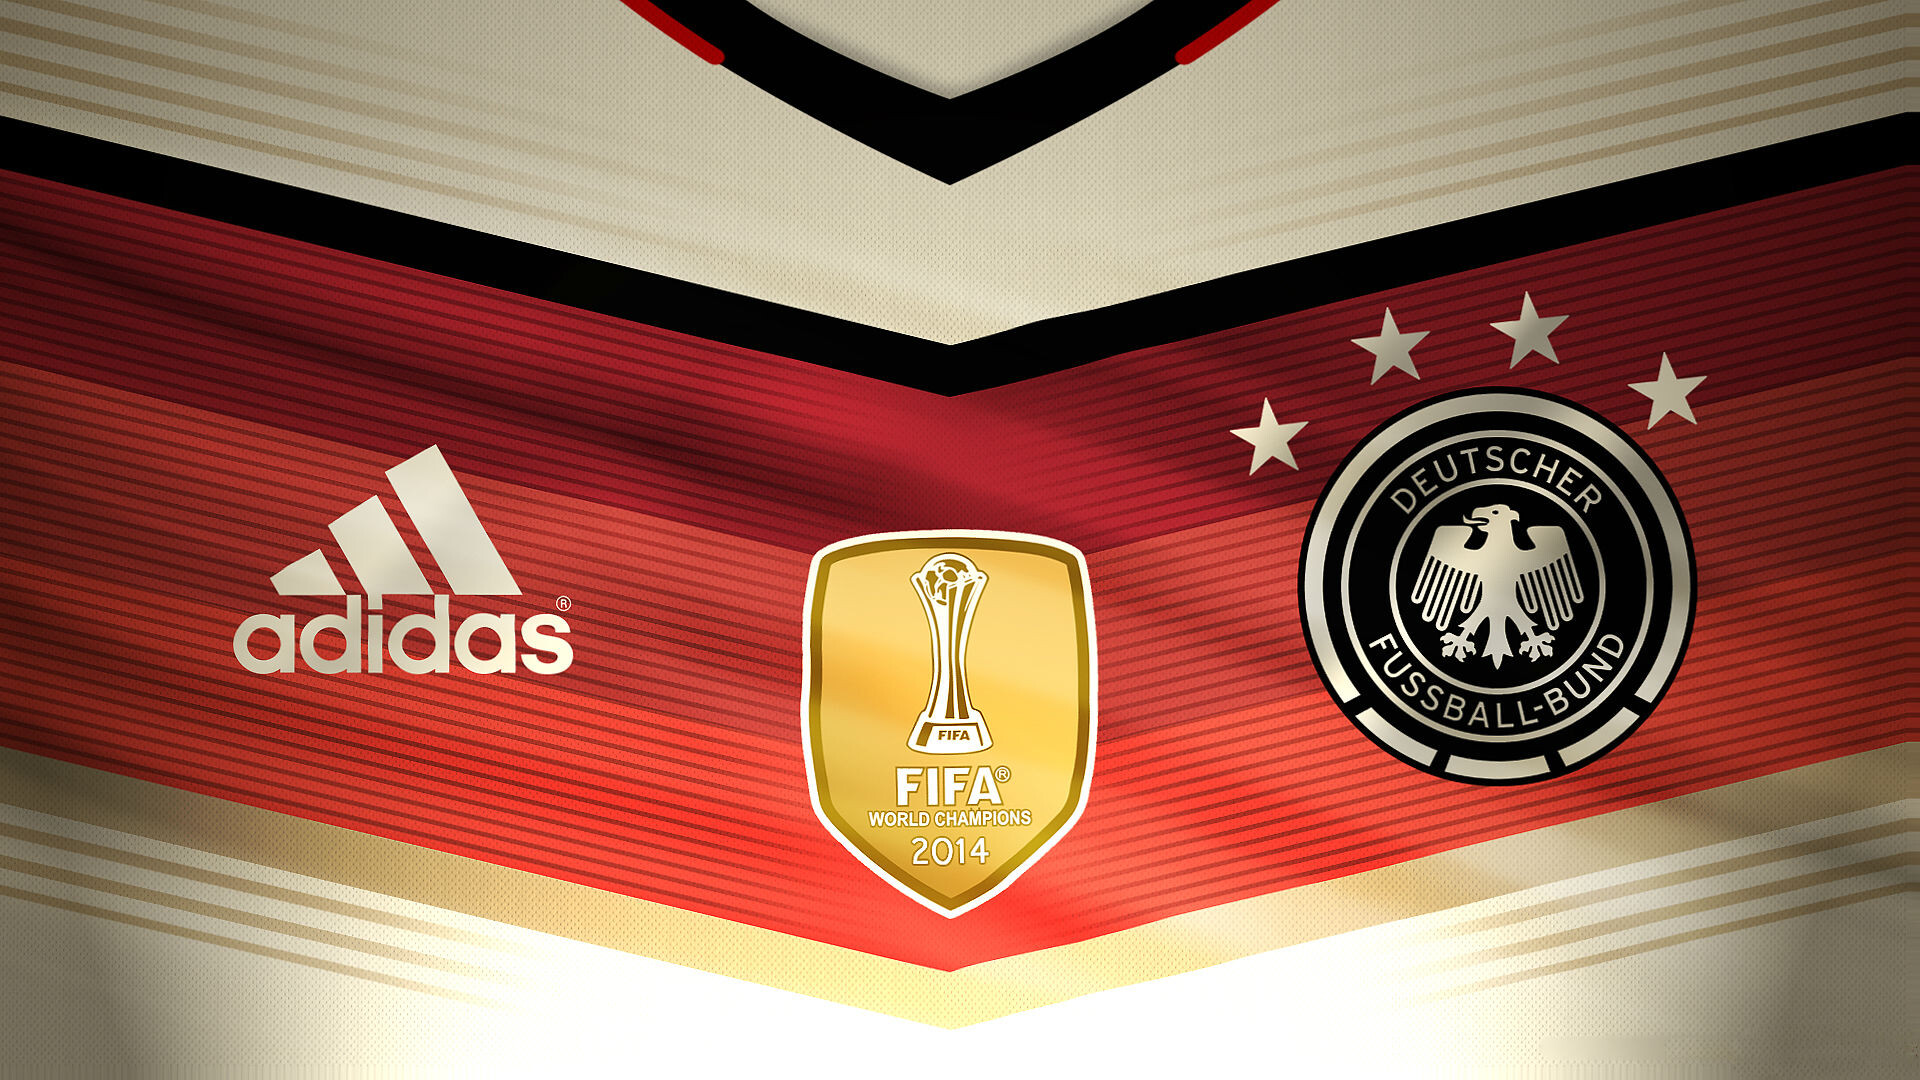 Germany Soccer Team: FIFA World Cup 2014 champions, Front of the uniform kit, International football. 1920x1080 Full HD Wallpaper.